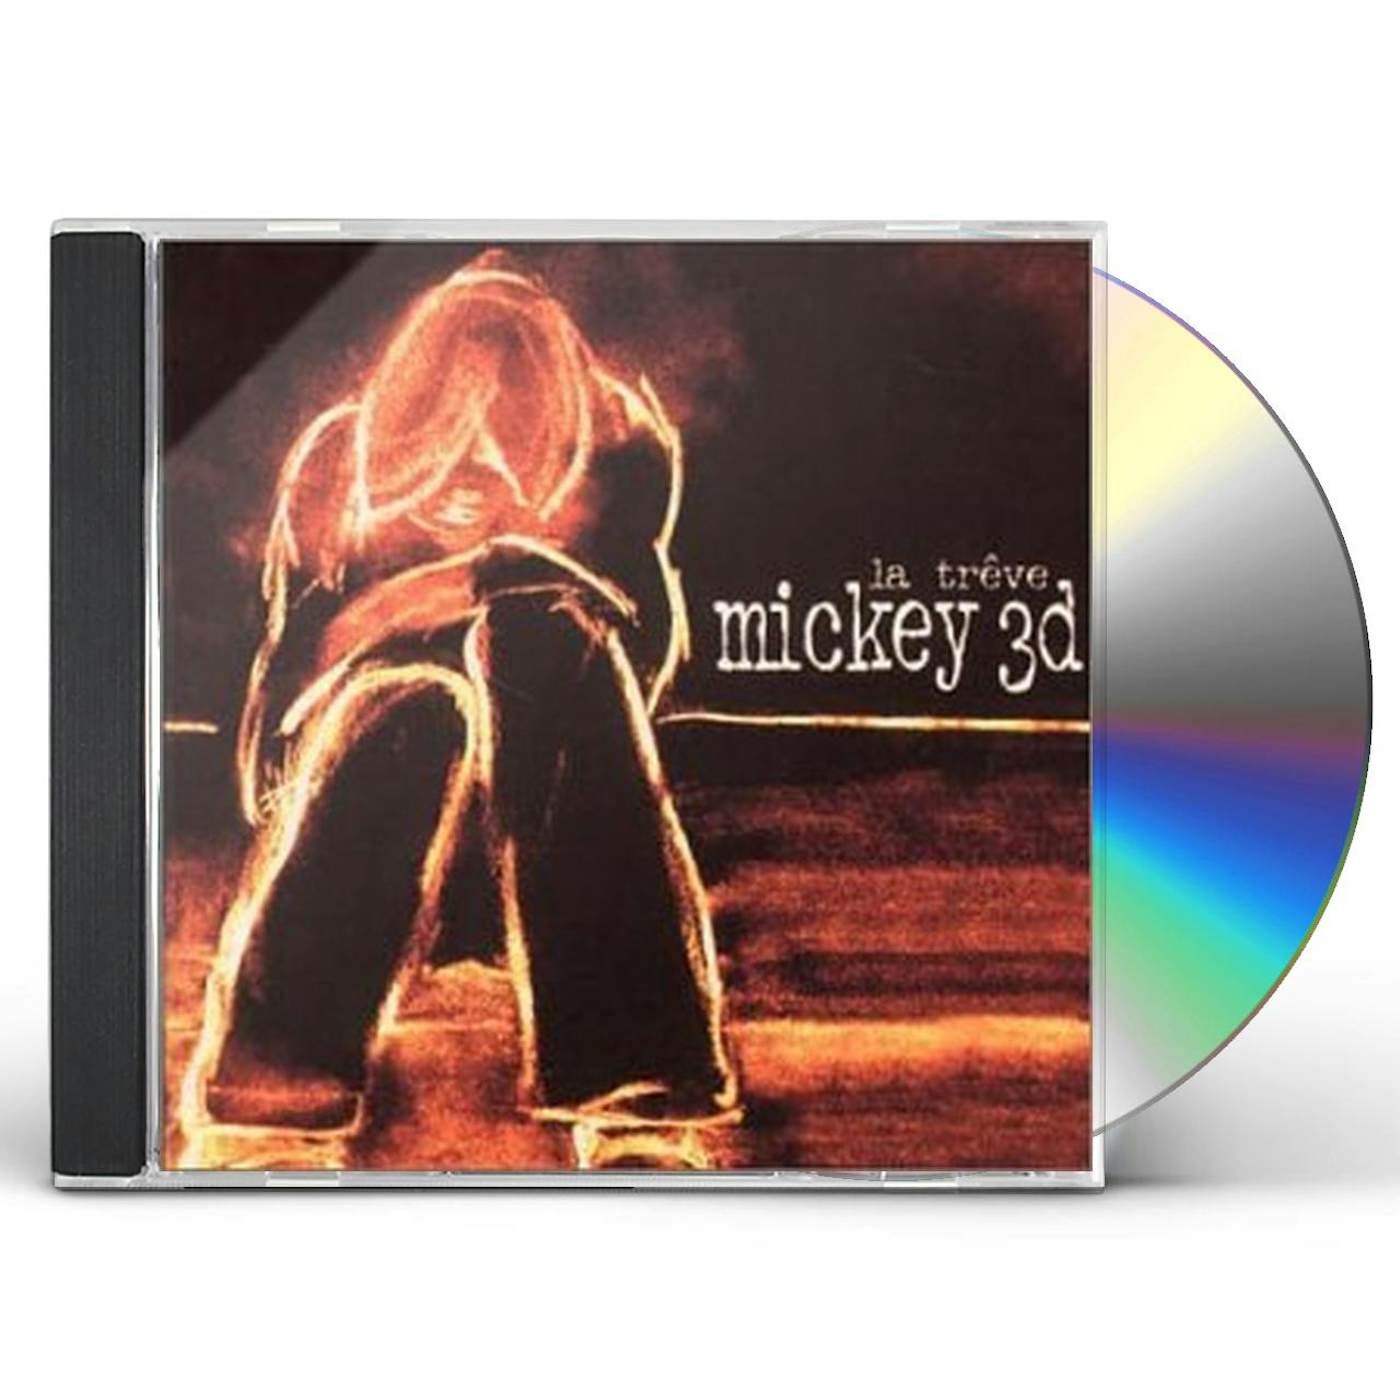 Mickey 3d TREVE CD